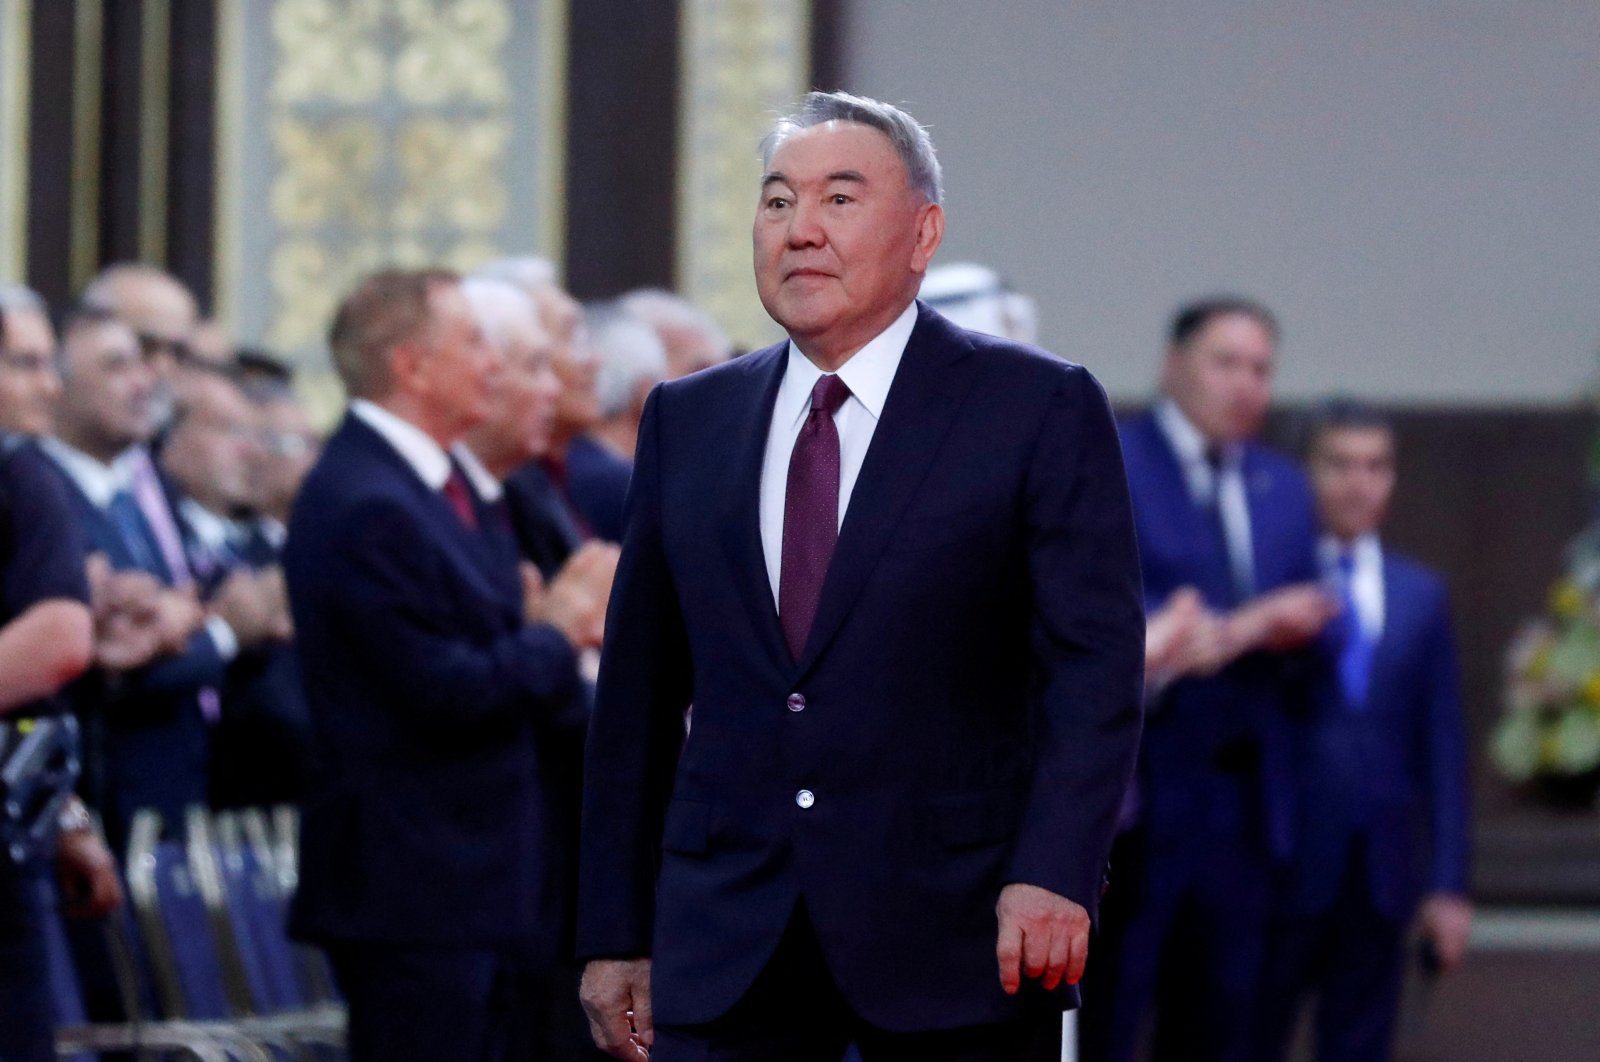 Former Kazakh president Nursultan Nazarbayev attends the inauguration of the new president, Kassym-Jomart Tokayev, in Nur-Sultan, Kazakhstan, June 12, 2019. (Reuters Photo)